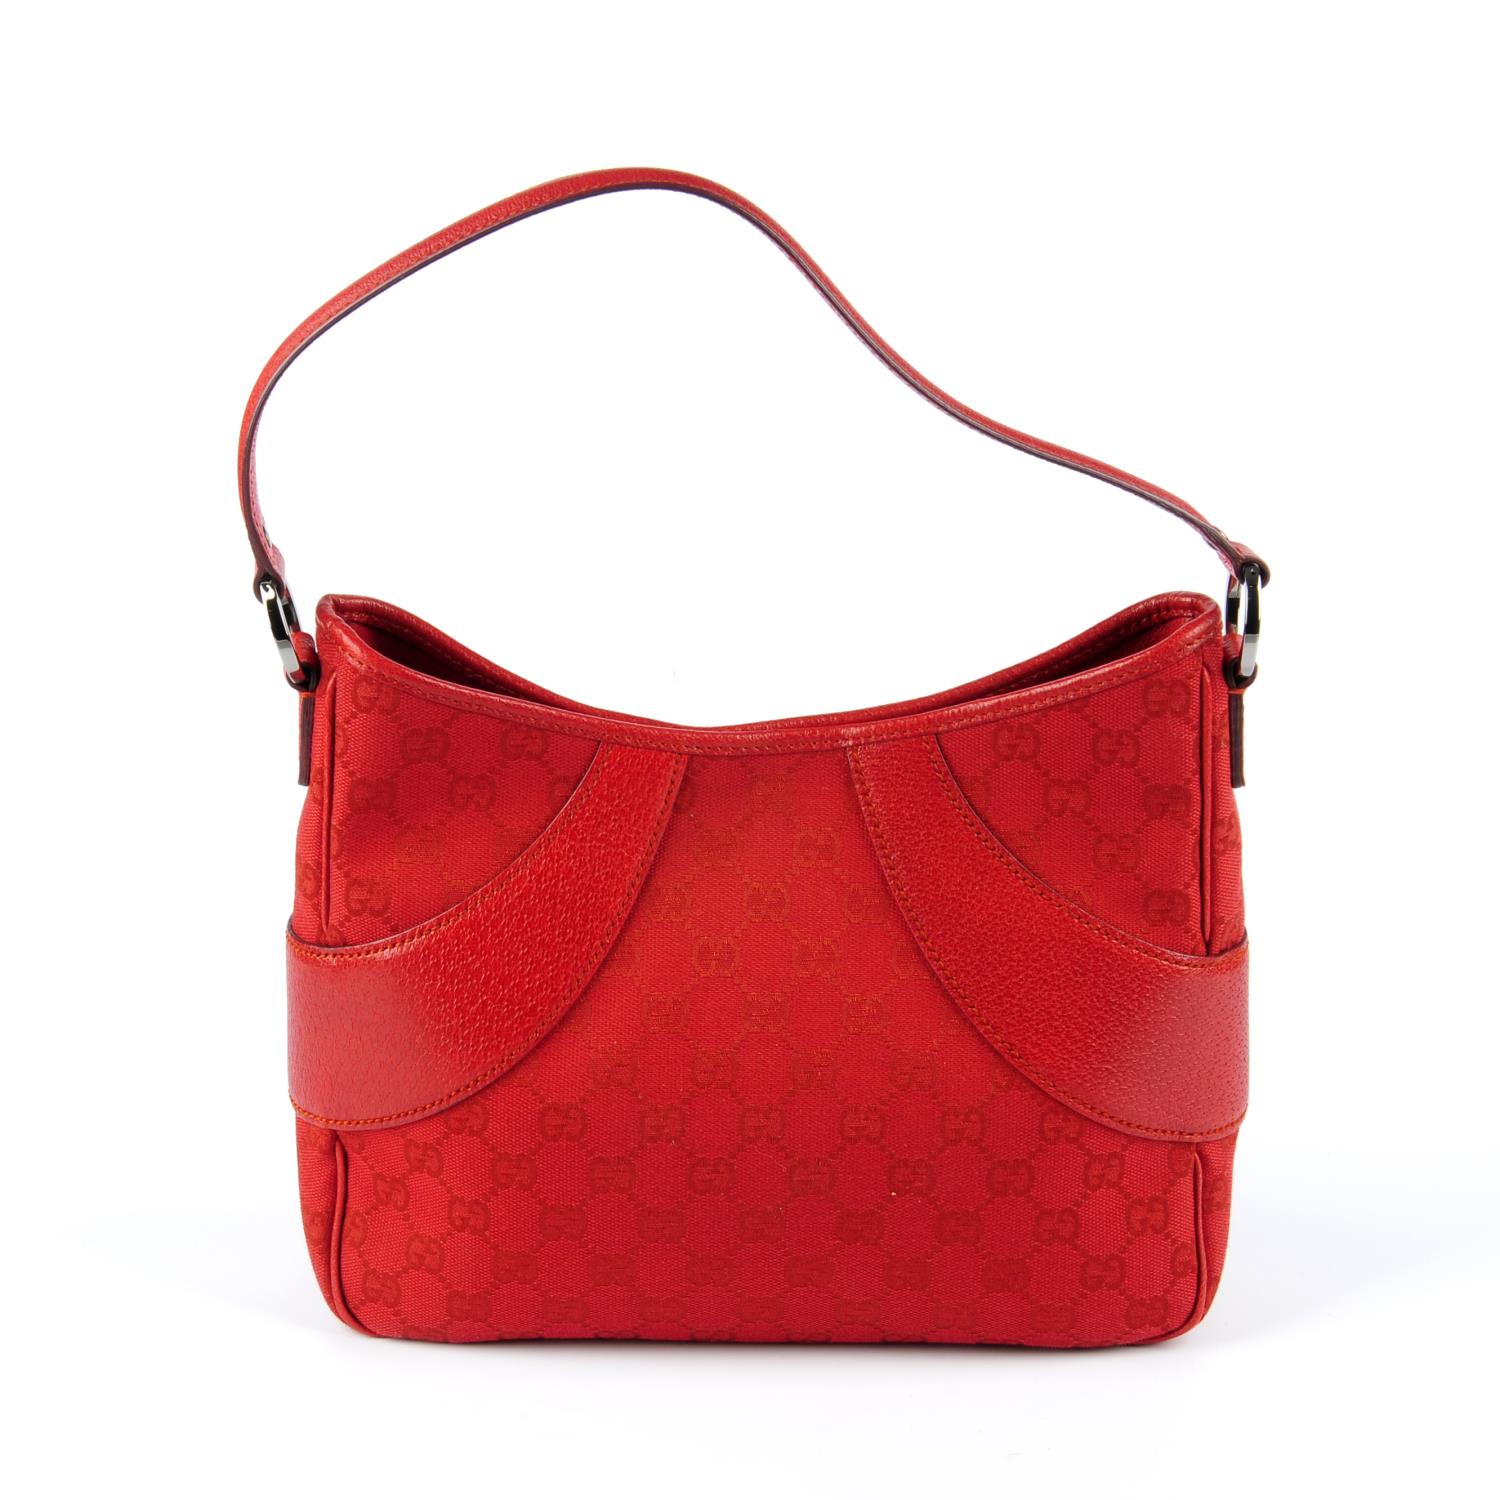 GUCCI - a red Monogram canvas handbag. - Image 2 of 4